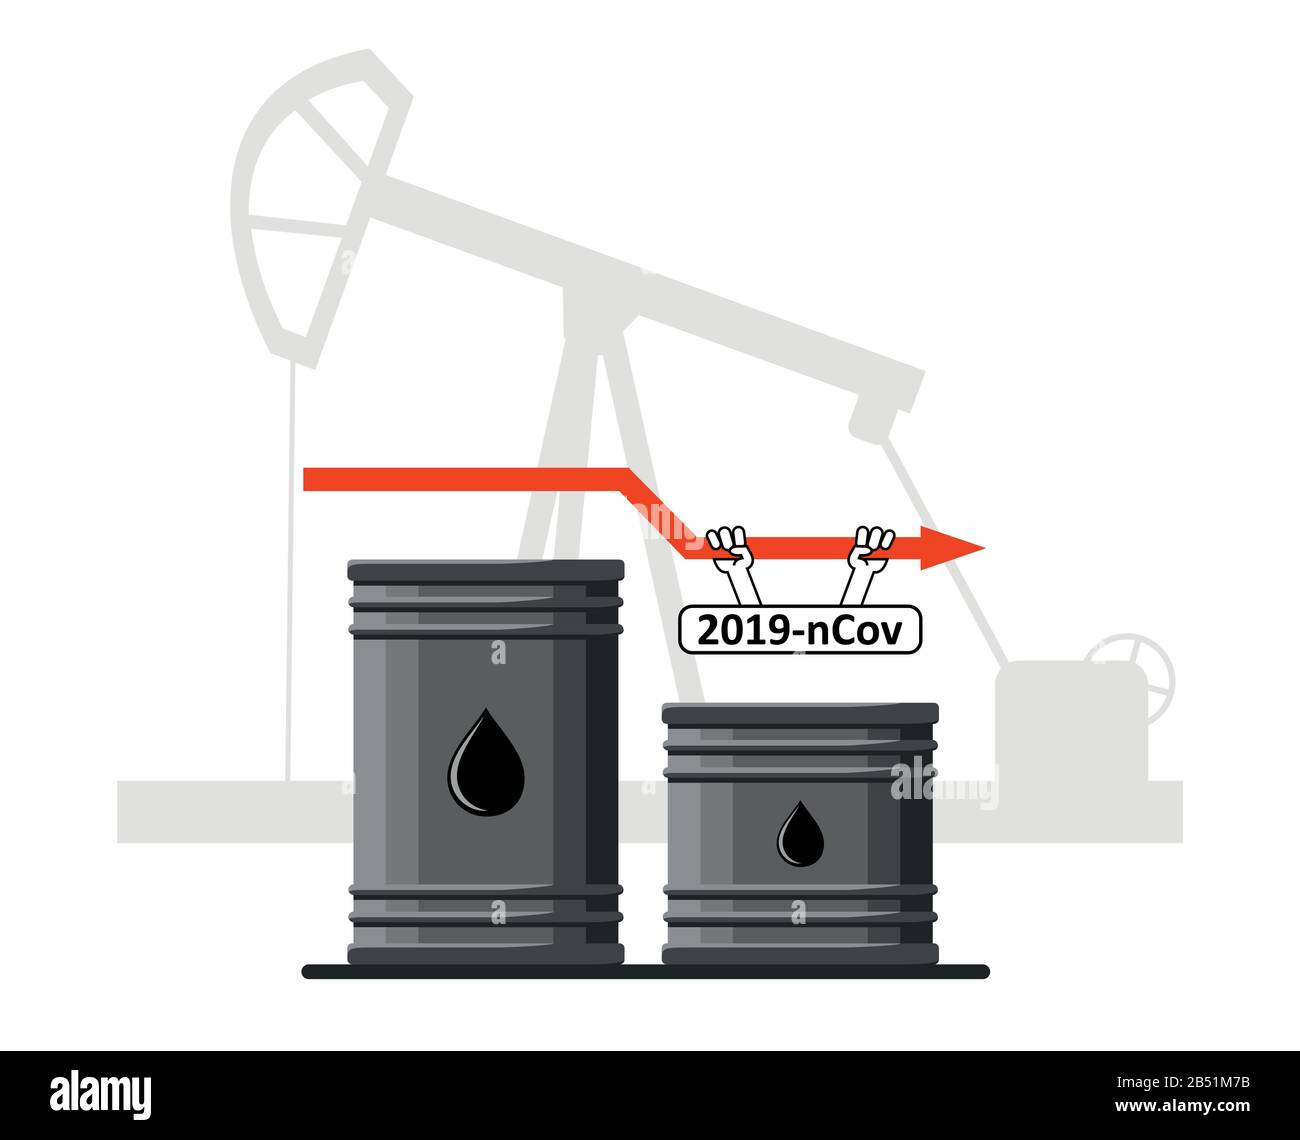 Verringerte Ölförderung durch Coronavirus, verringerter Ölverbrauch durch 2019-nCov, Kovid-2019. Ölfässer vor dem Hintergrund der Ölbohrinsel Stock Vektor